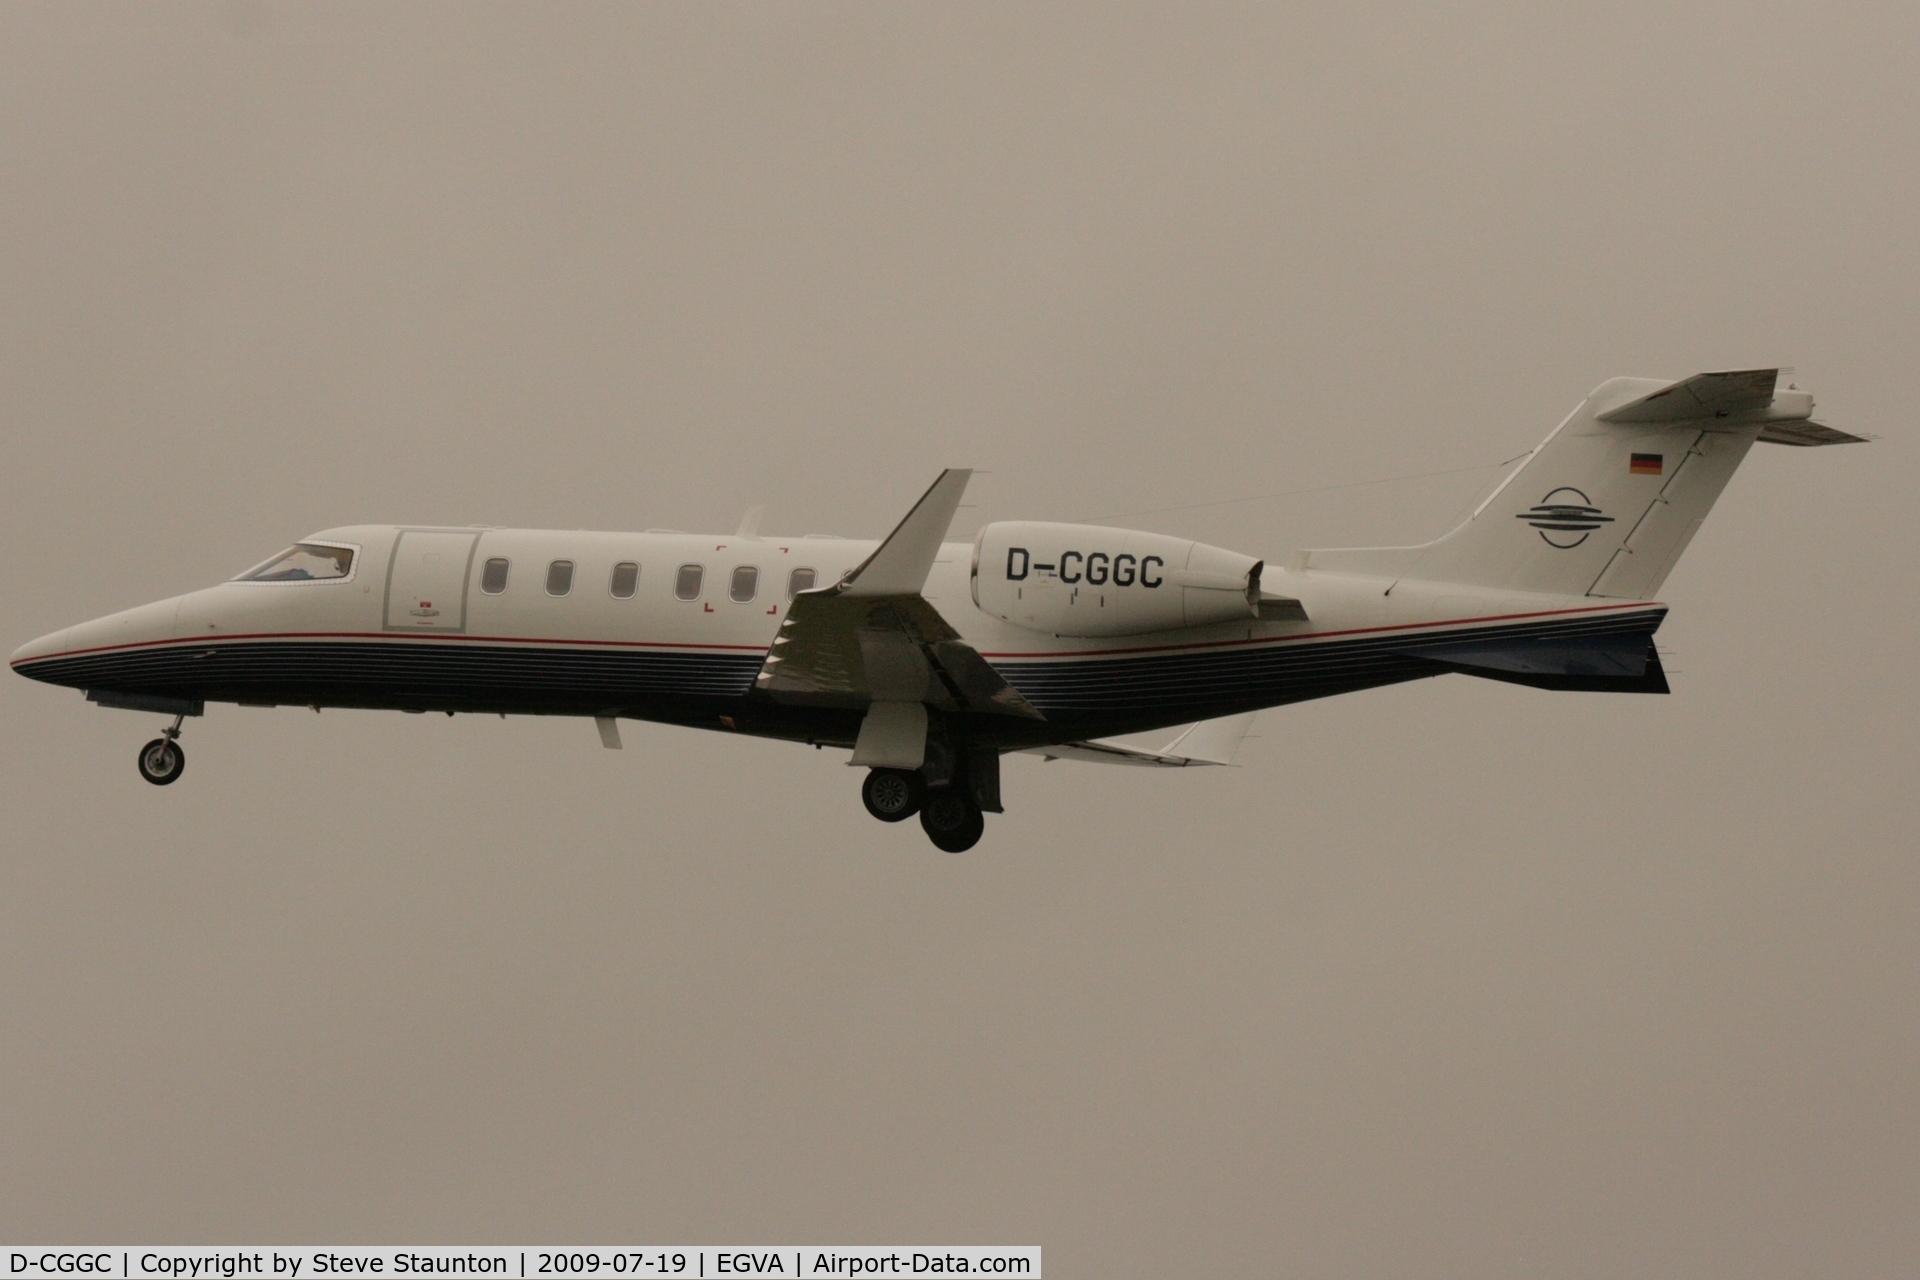 D-CGGC, 2008 Learjet 40 C/N 45-2107, Taken at the Royal International Air Tattoo 2009